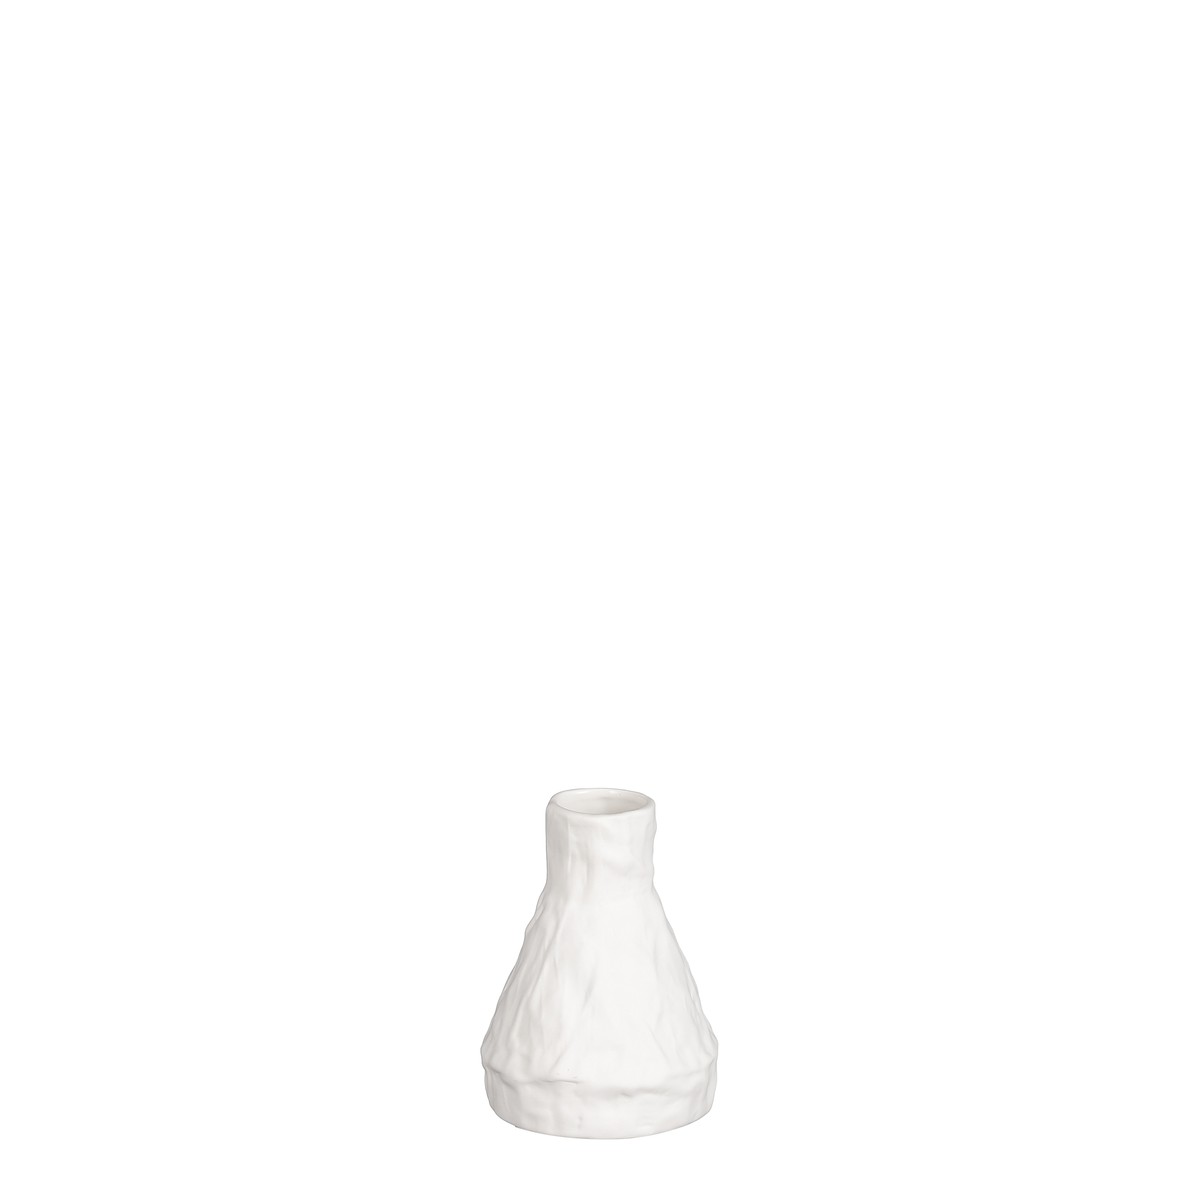   Vase Jet blanc  7.5x10cm